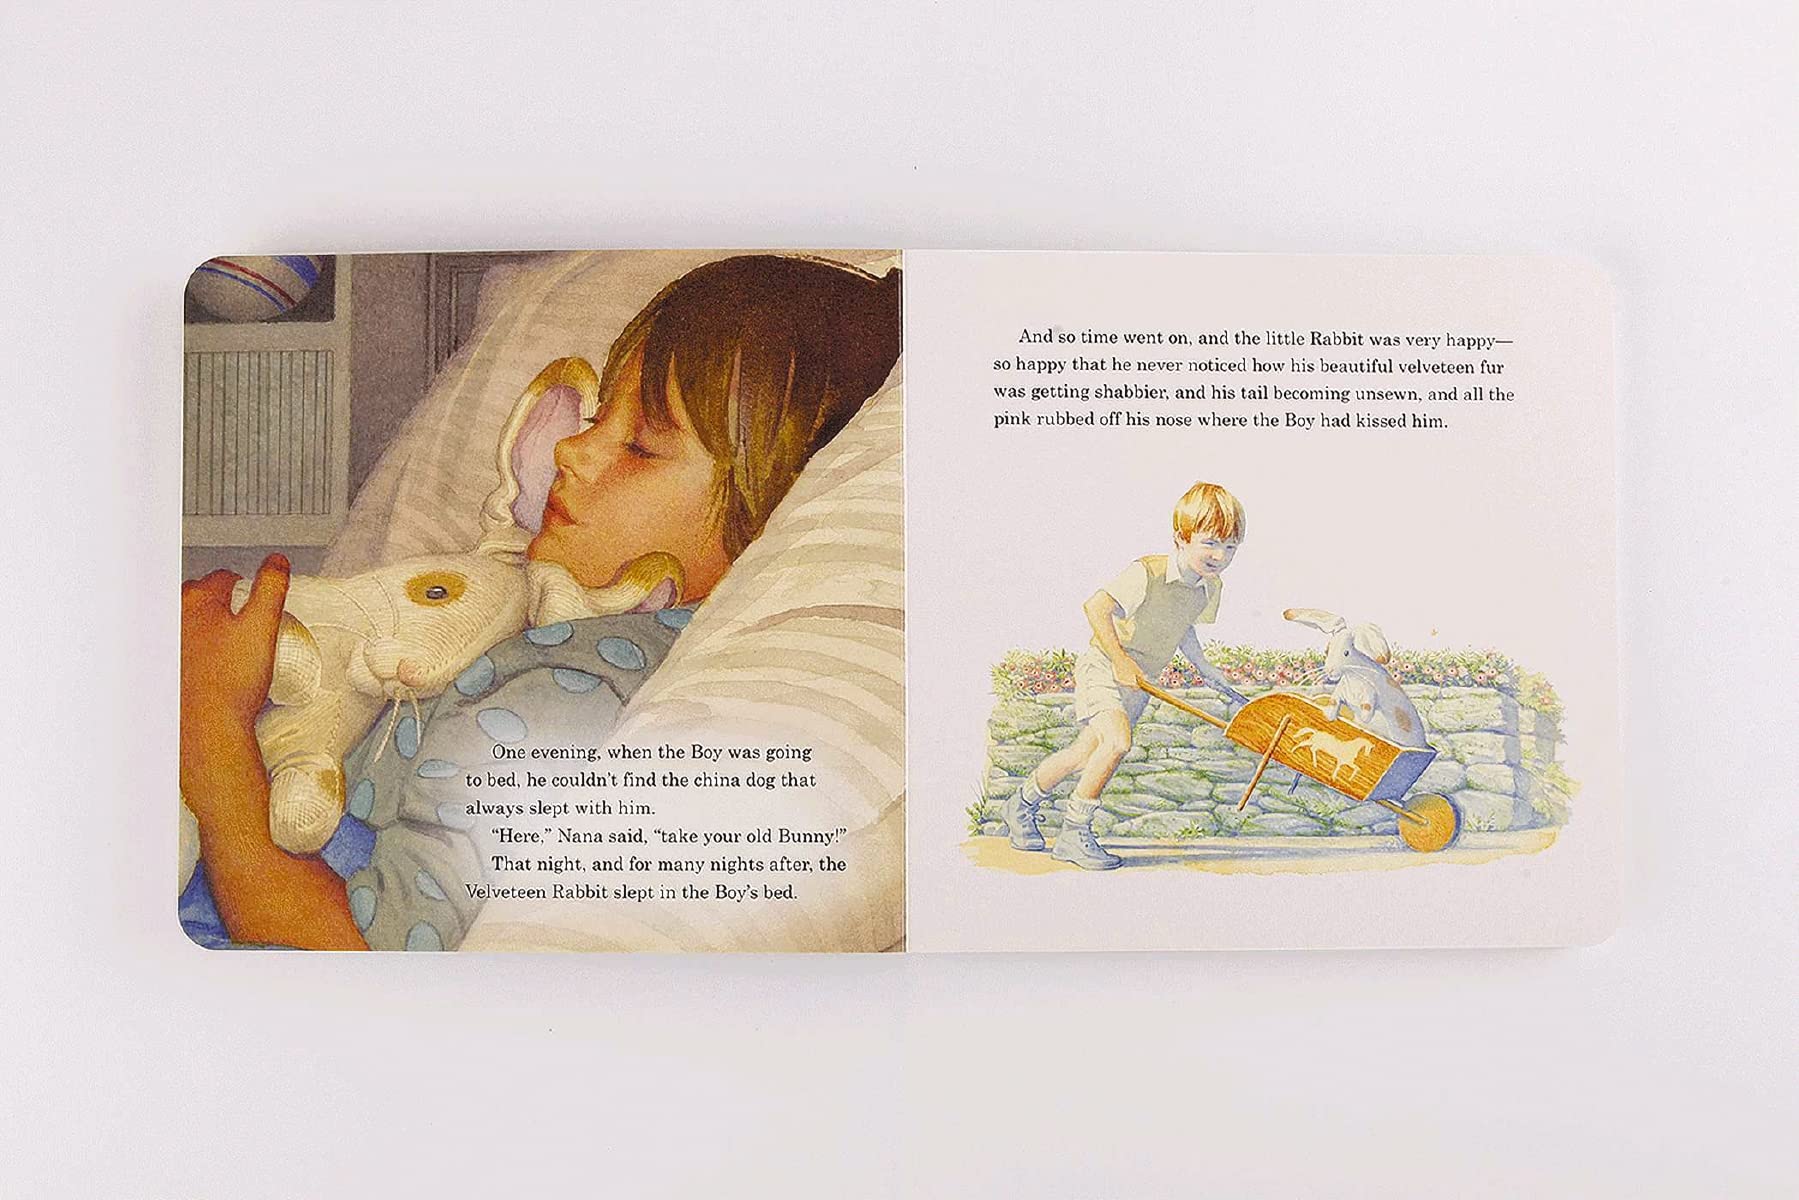 The Velveteen Rabbit Plush Gift Set: The Classic Edition Board Book + Plush Stuffed Animal Toy Rabbit Gift Set